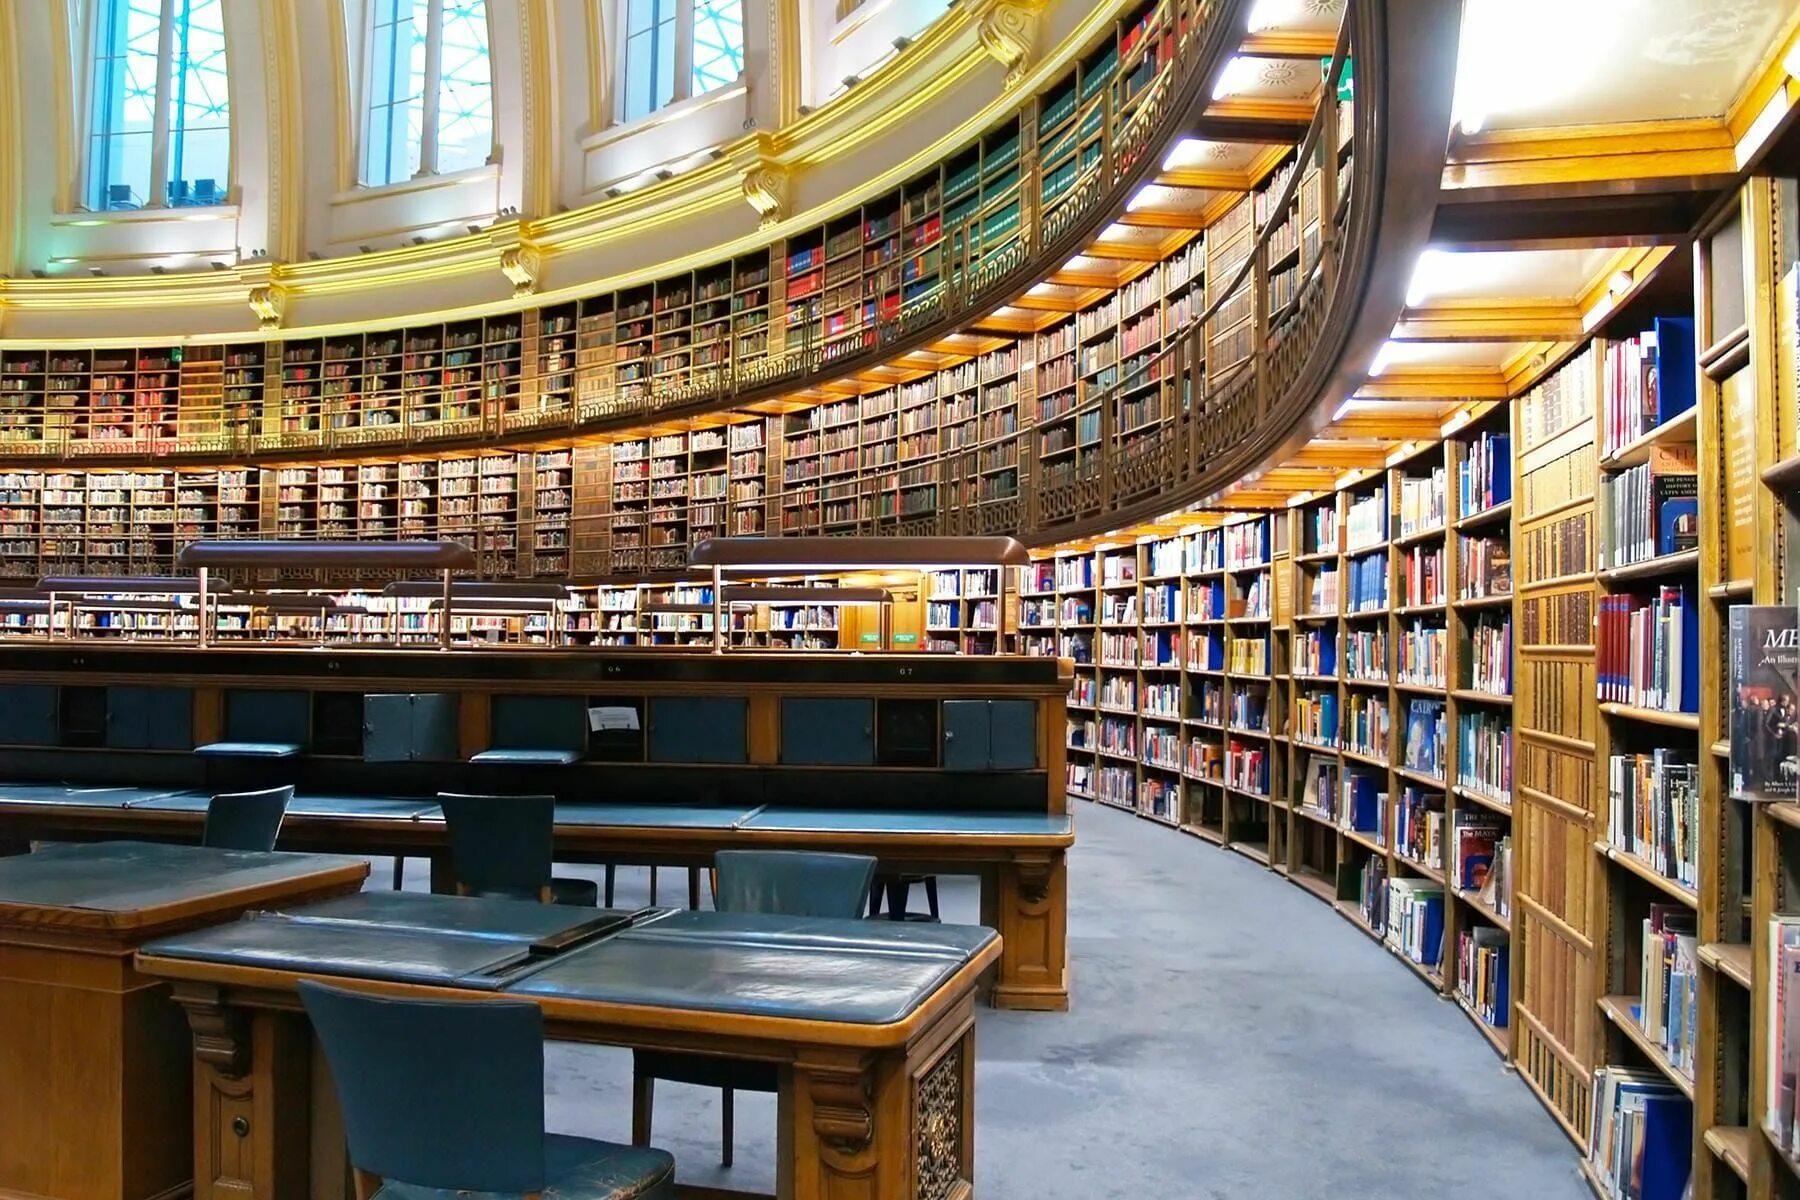 Extension library. Библиотека британского музея. Библиотека британского музея в Лондоне. Библиотека в Мюнхене. Баварская государственная библиотека в Мюнхене.